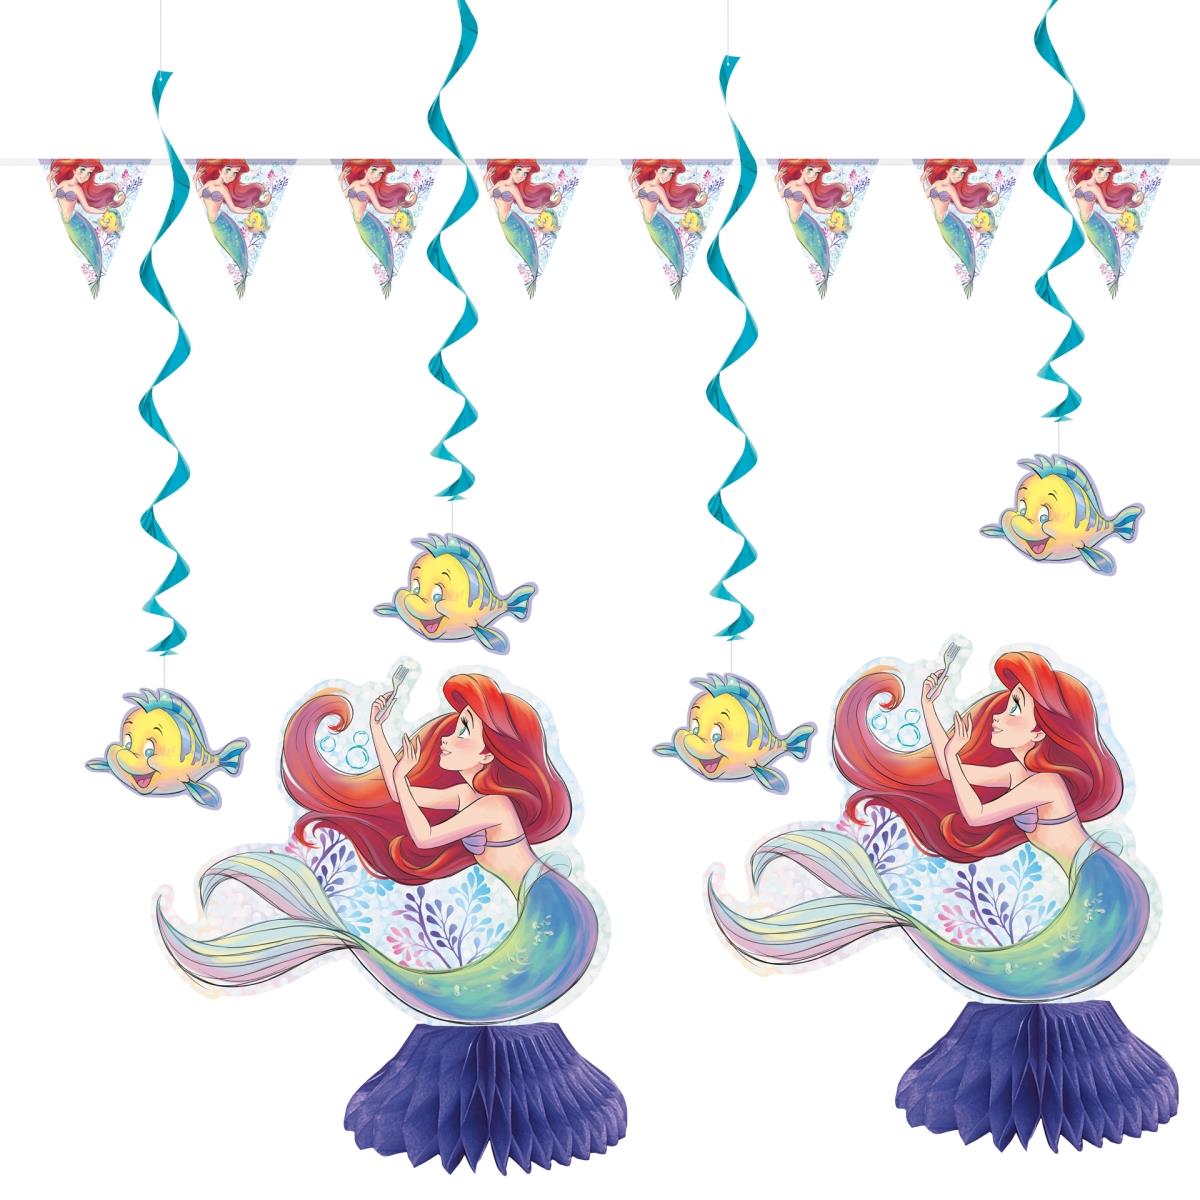 310005 The Little Mermaid Decoration Kit - Piece Of 7